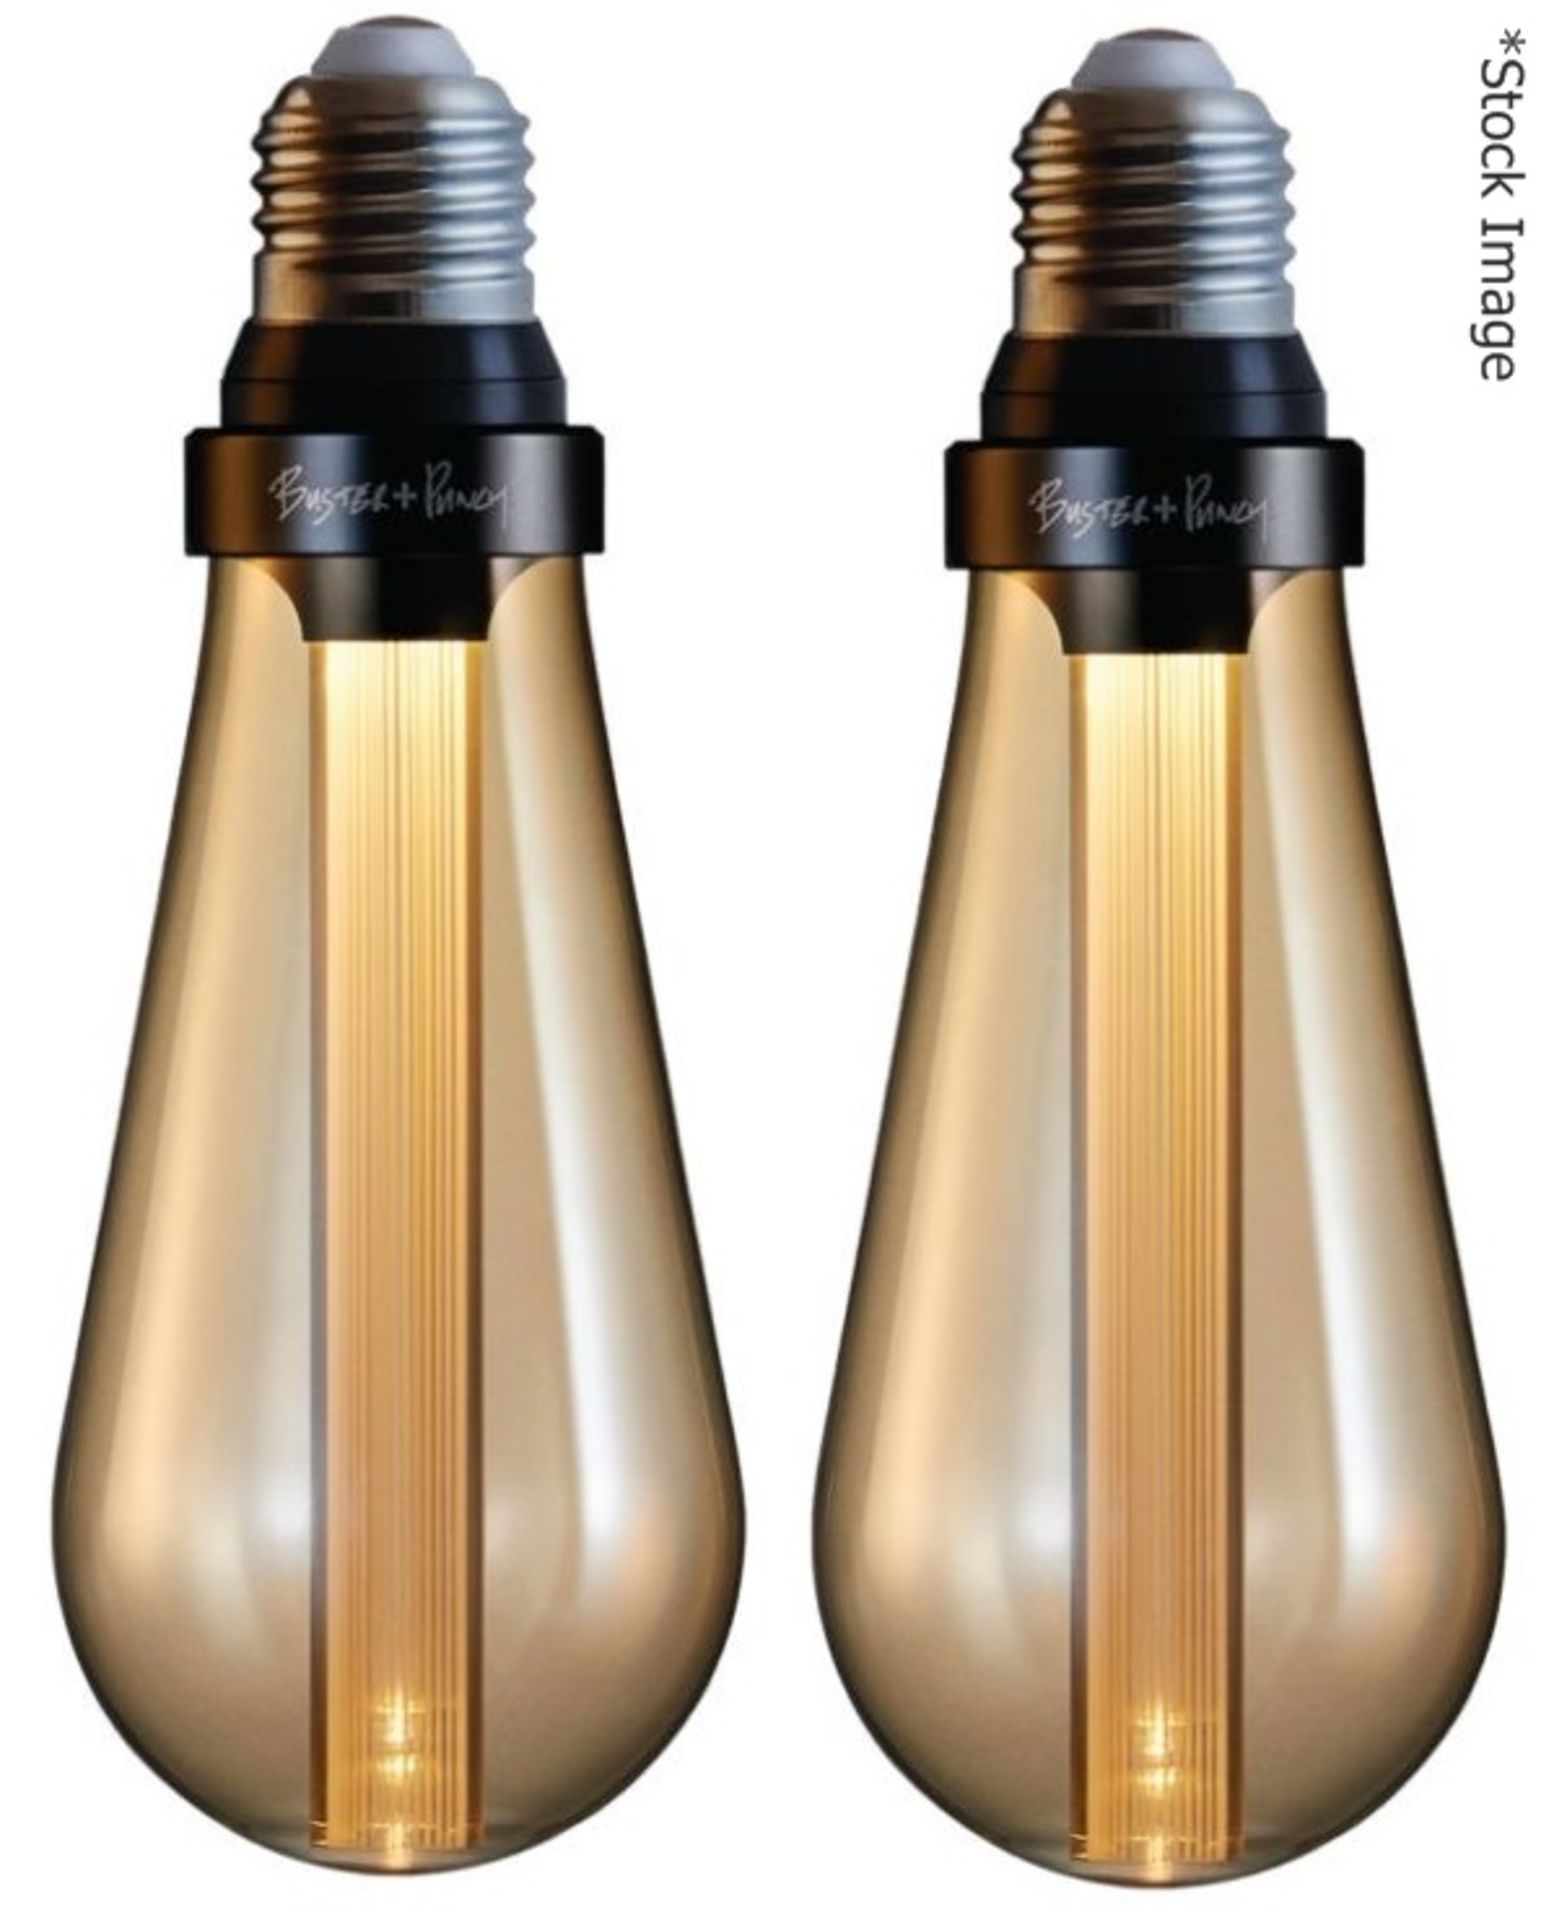 2 x BUSTER + PUNCH Designer Dimmable 'Teardrop' E27 Light Bulbs (Gold) - Total Original Price £69.98